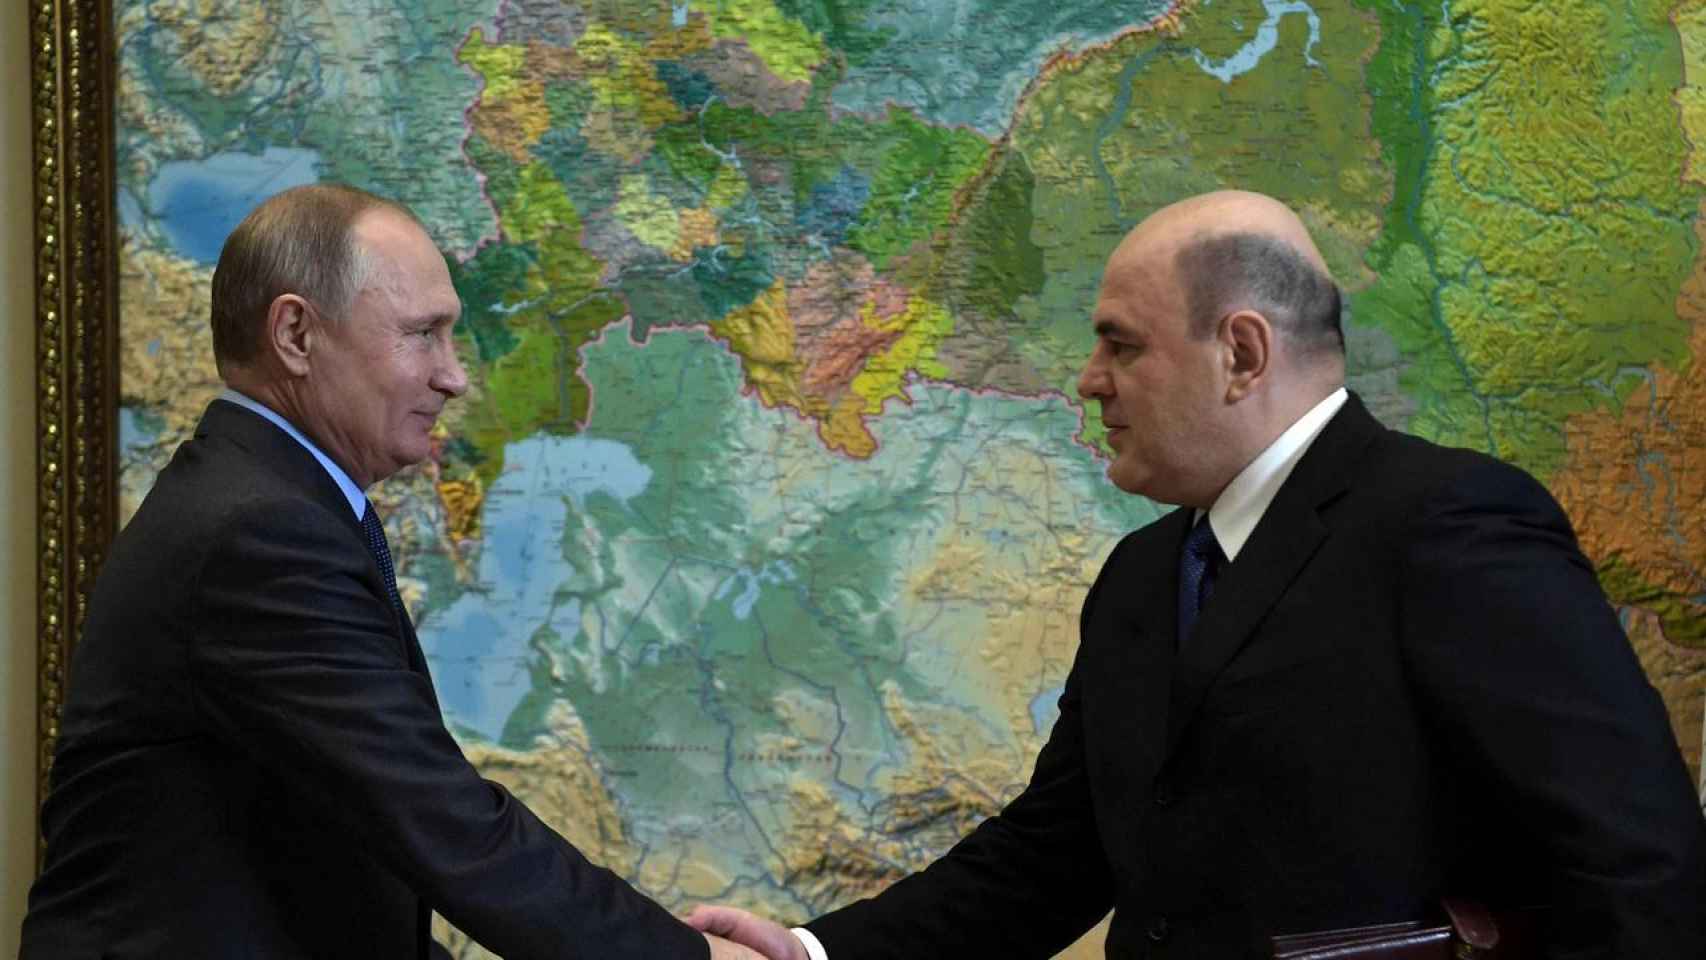 Mijaíl Mishustin con Vladimir Putin en una imagen de archivo.